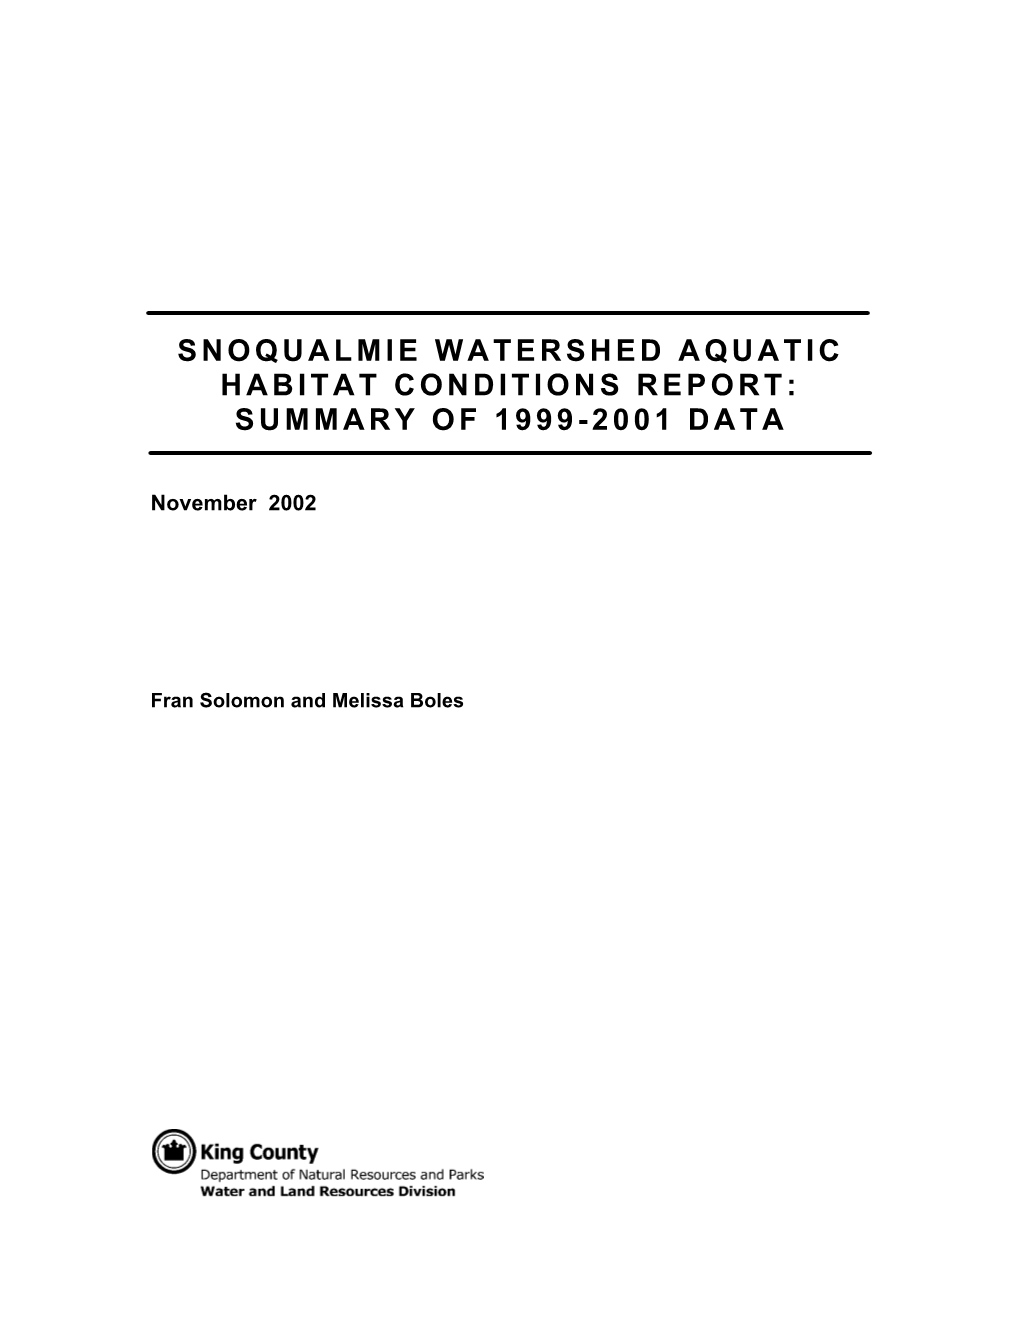 Snoqualmie Watershed Aquatic Habitat Conditions Report: Summary of 1999-2001 Data